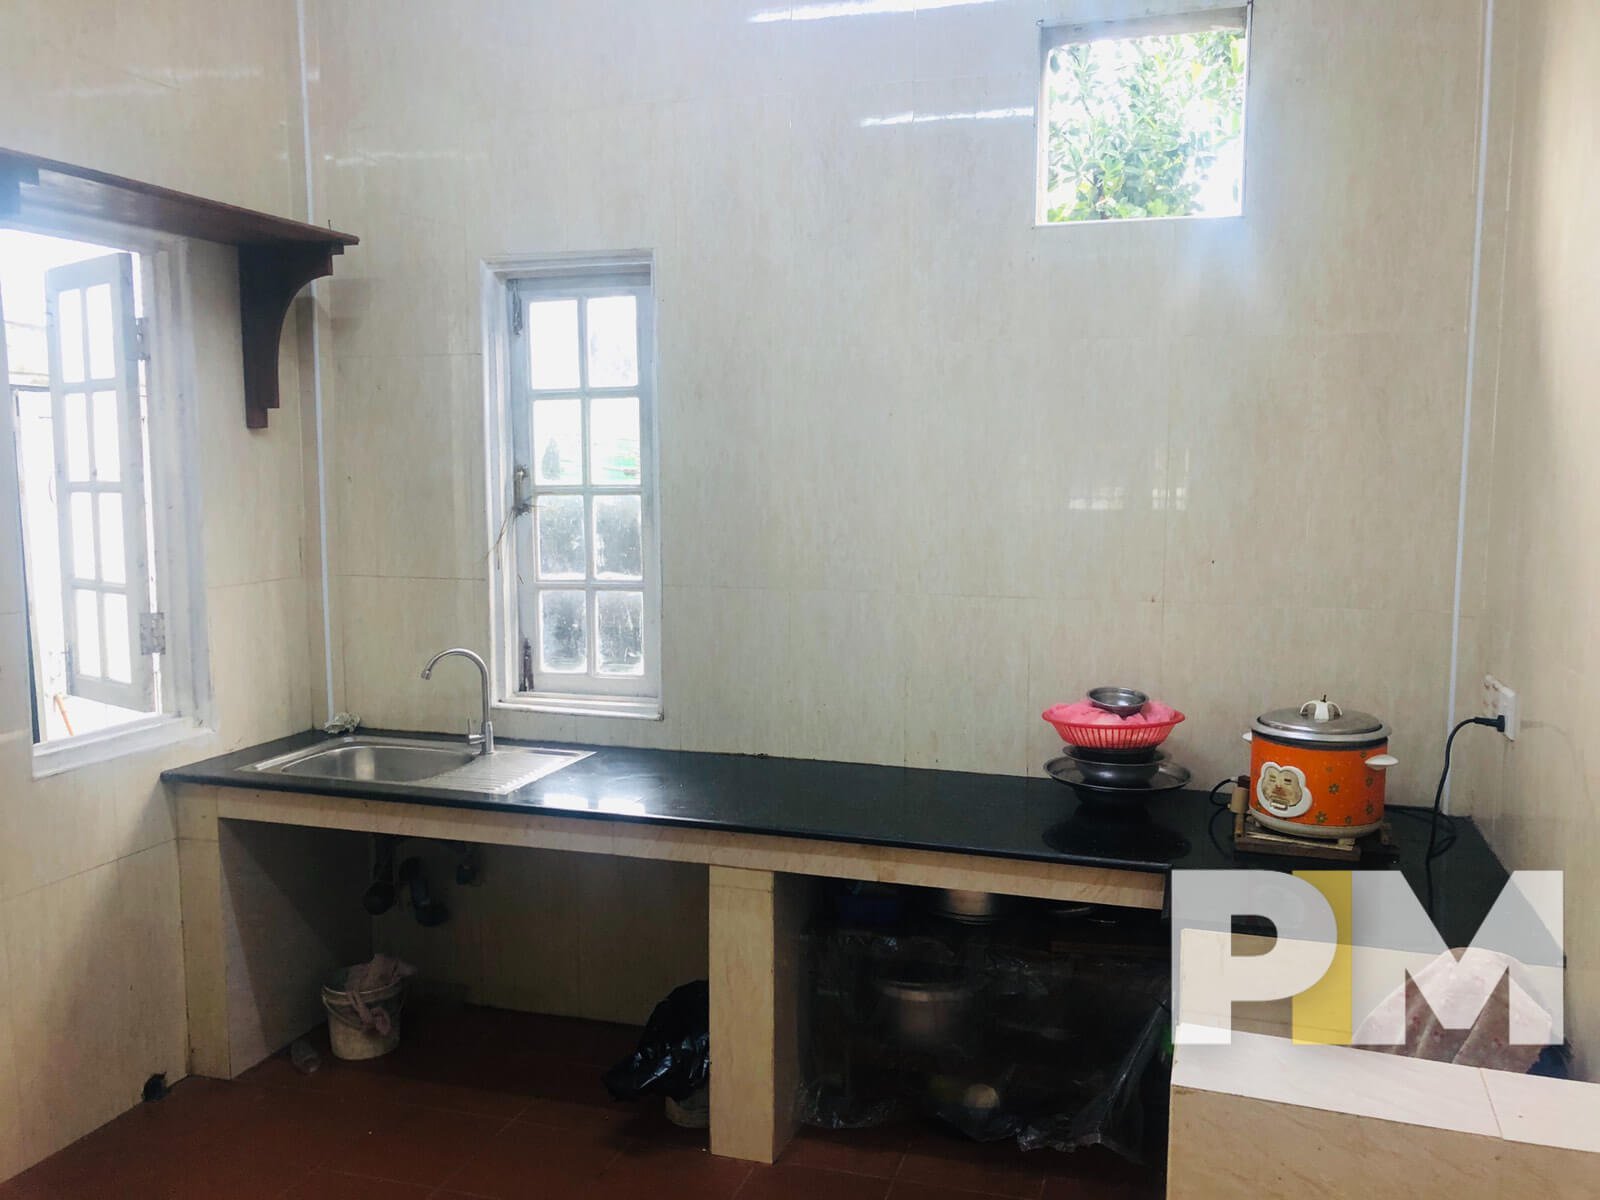 kitchen with sink - Yangon Property